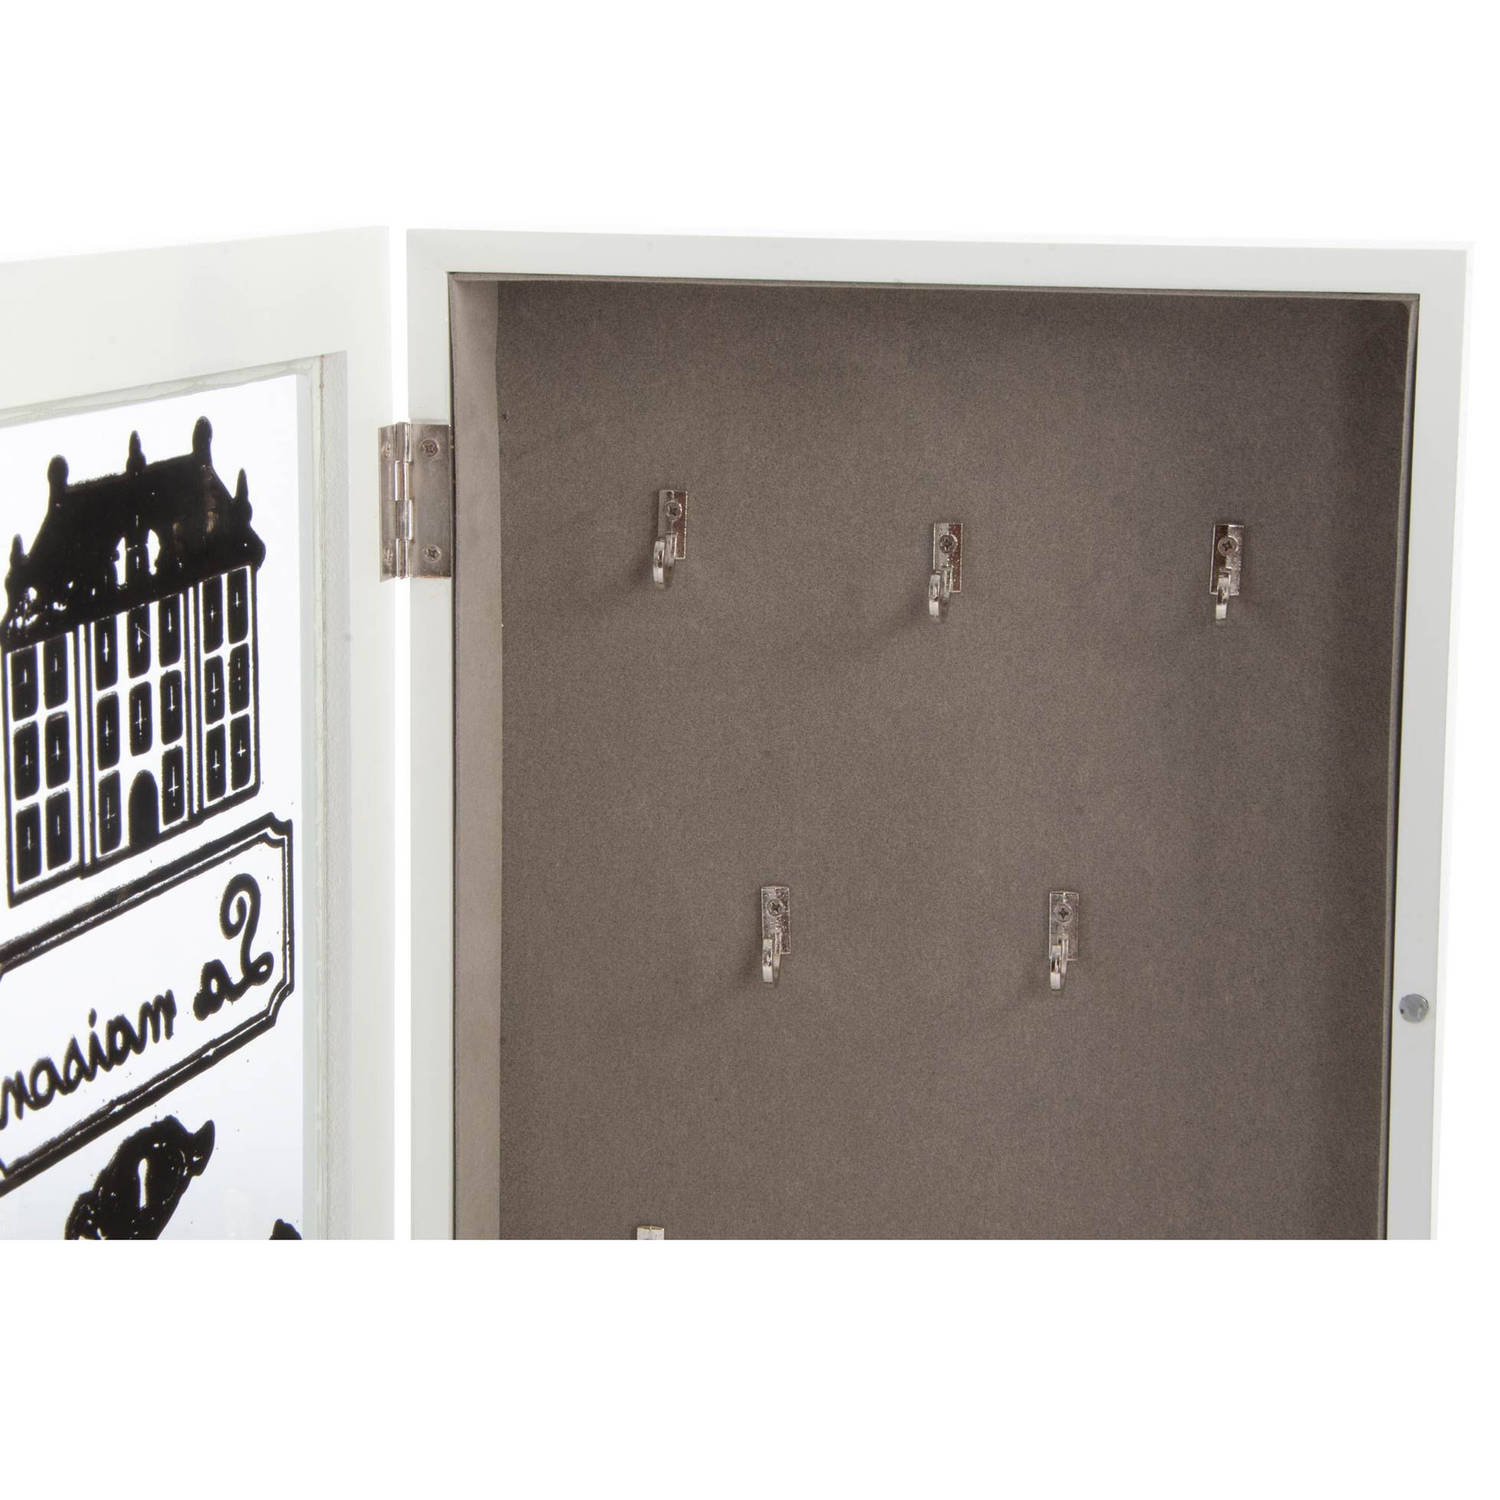 Vesting Lijkt op Adviseur Houten sleutelkast/sleutelkluis wit La Maison 23 x 32 cm - Sleutelkastjes |  Blokker